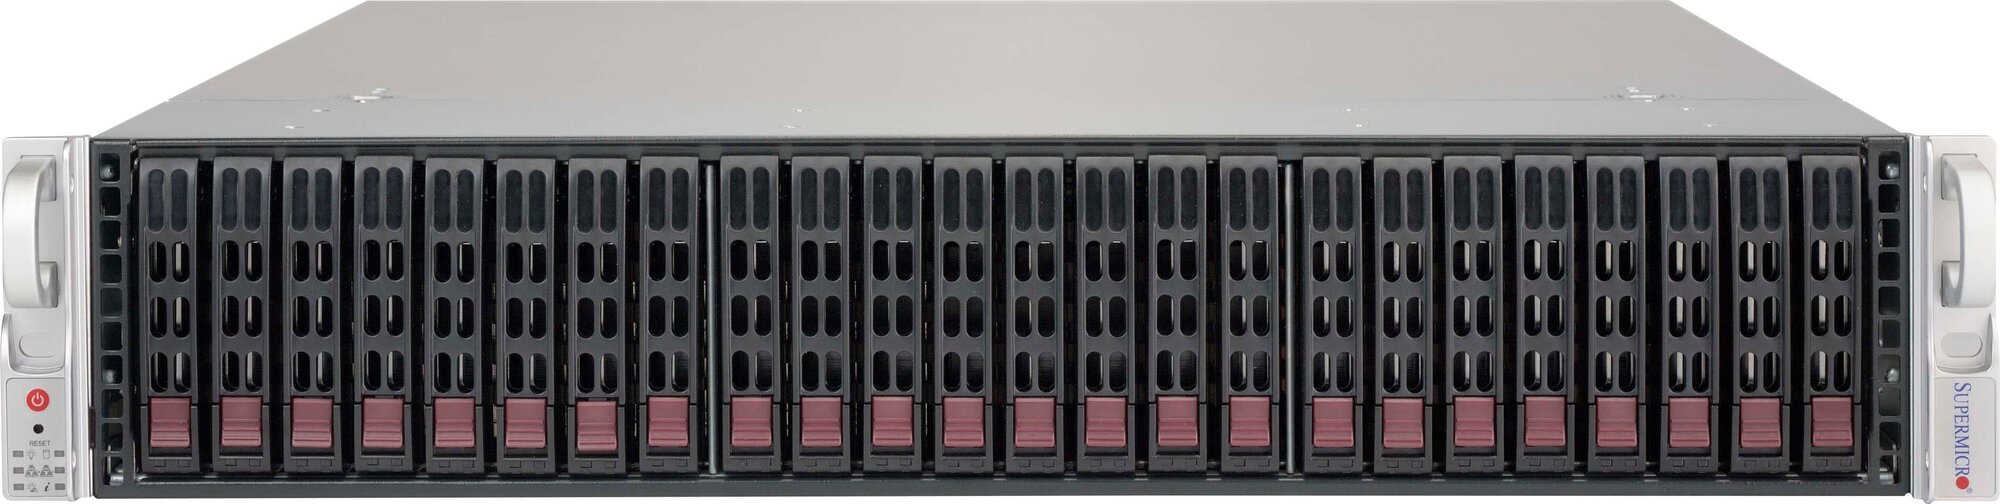 Корпус Supermicro CSE-216BE1C-R609JBOD 2U Storage JBOD Chassis 2x600W, 24x2.5" SAS3/SATA3 HDD/SSD , Single SAS3/2 or SATA3 HDDs (12Gb/s) Expander, LP